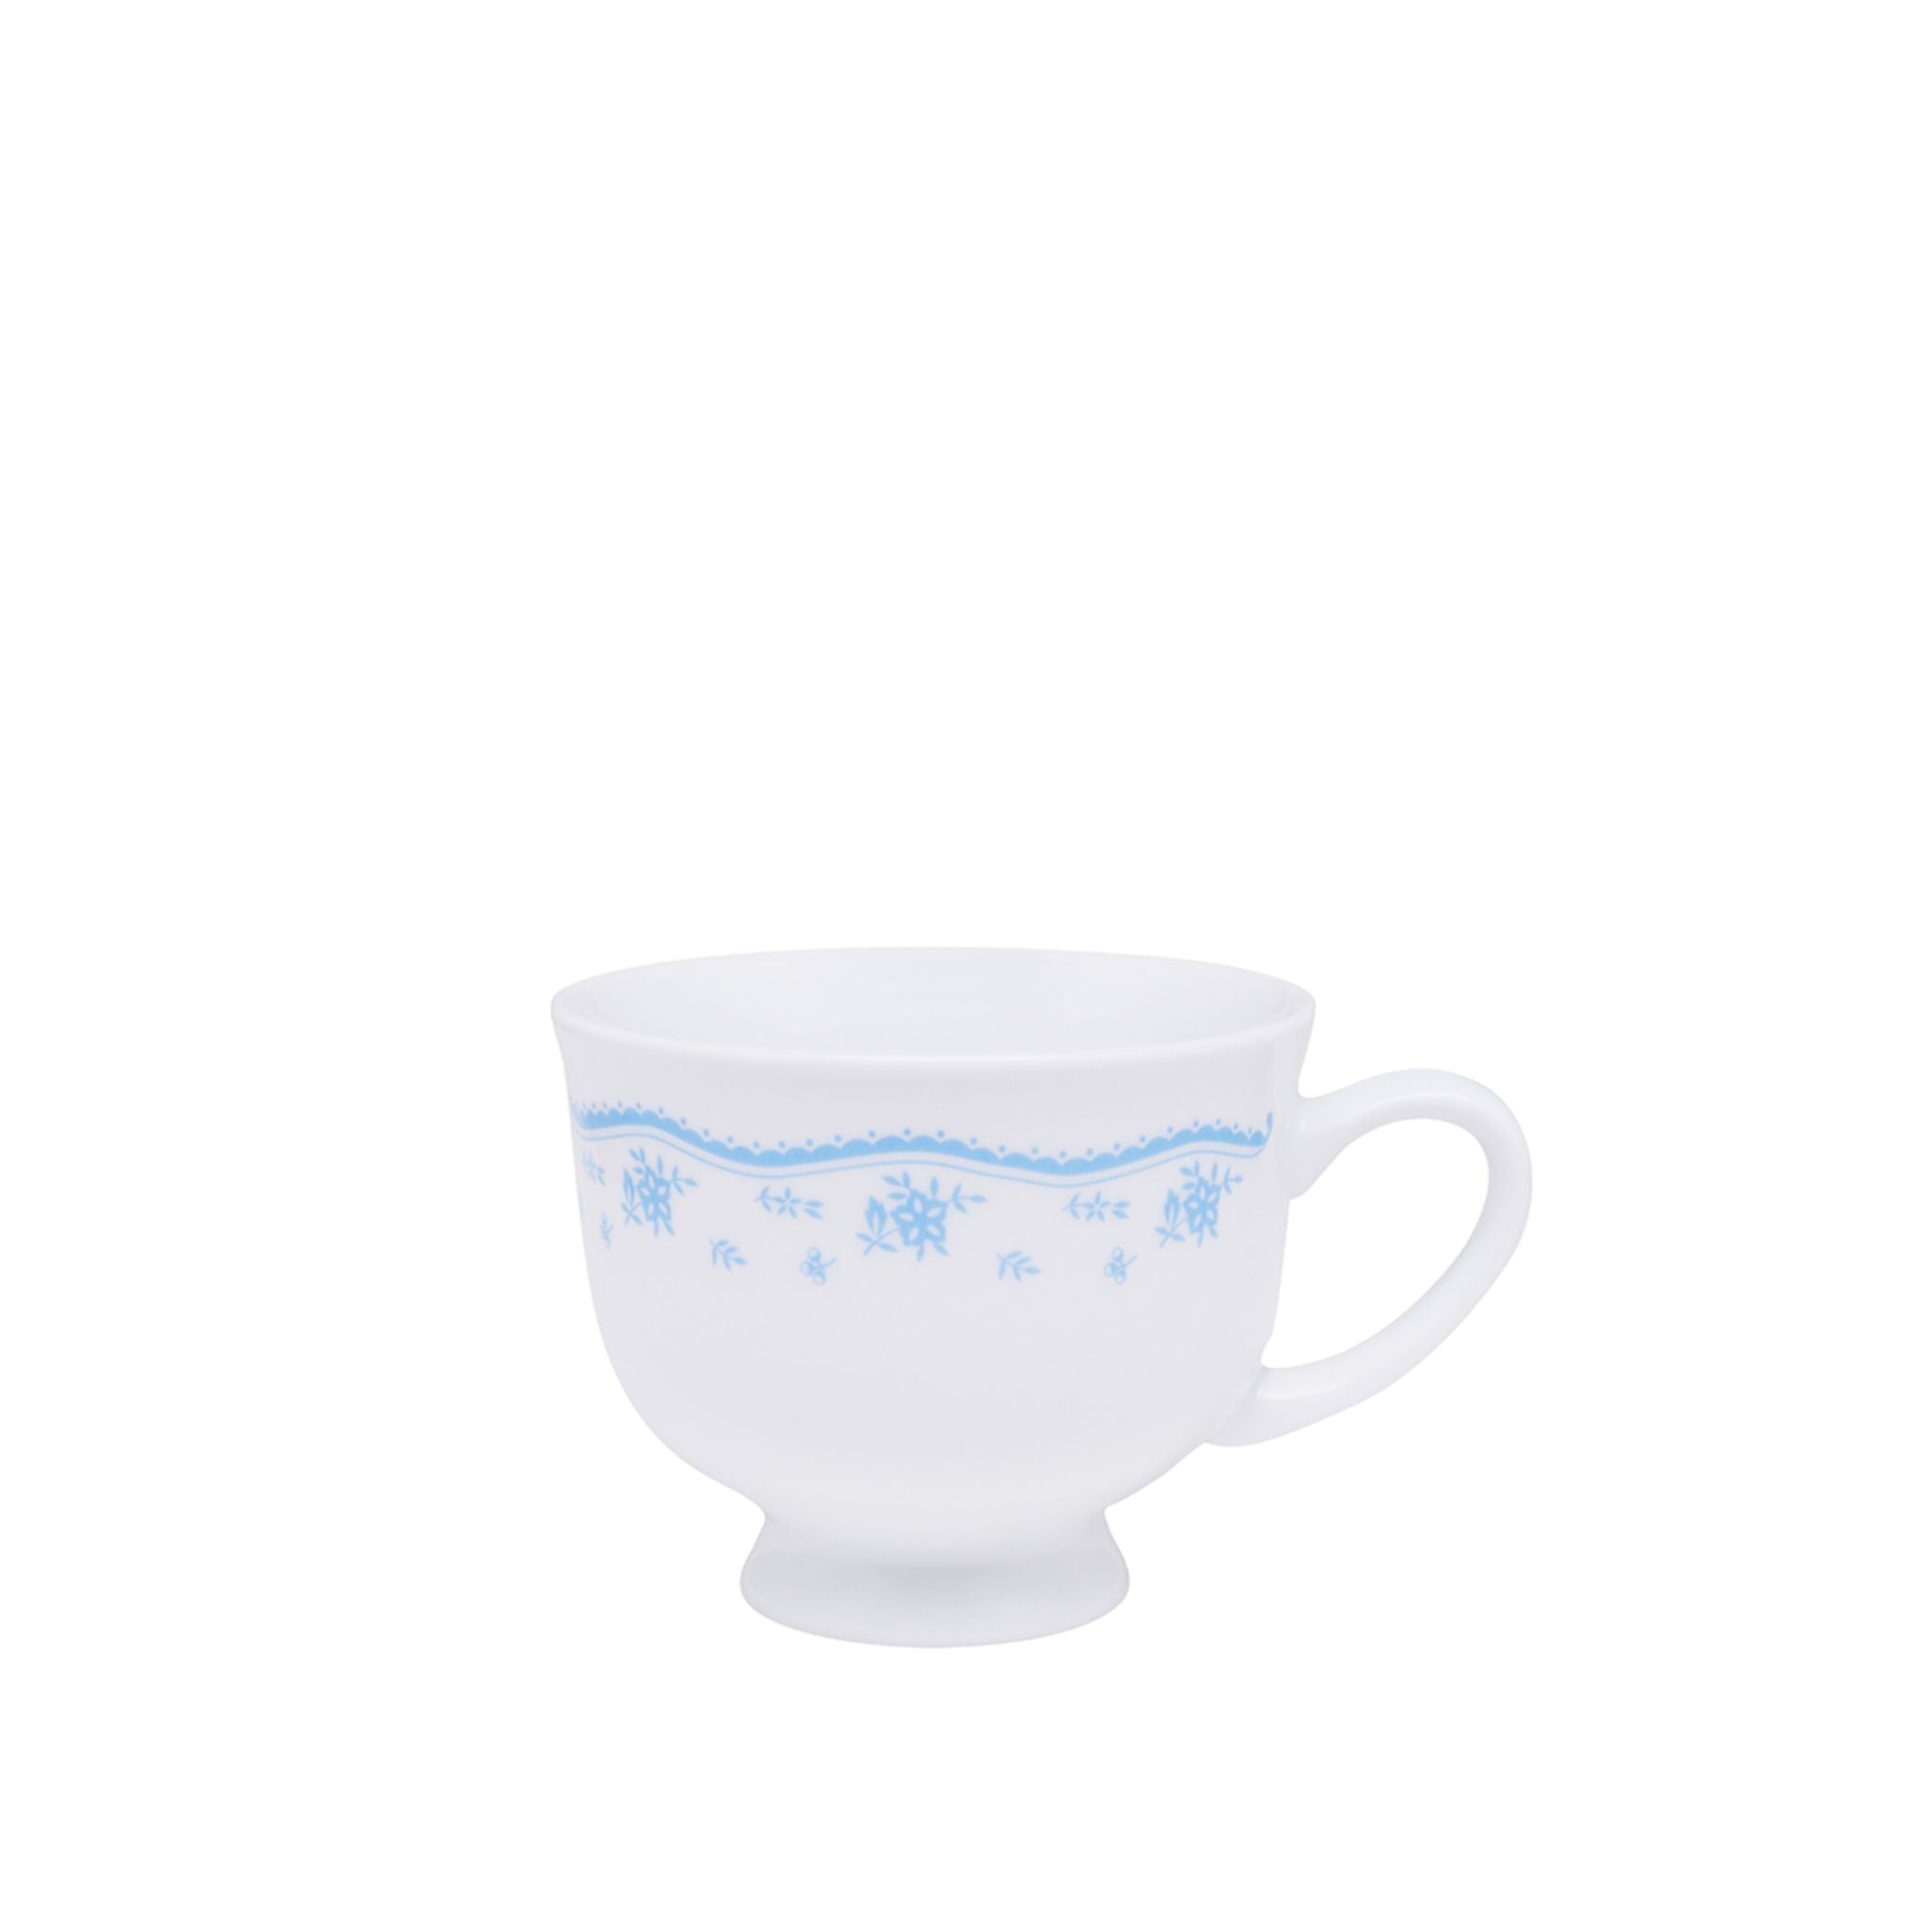 Corelle Coordinates 226ml Porcelain Cup - Morning Blue (226-MB)